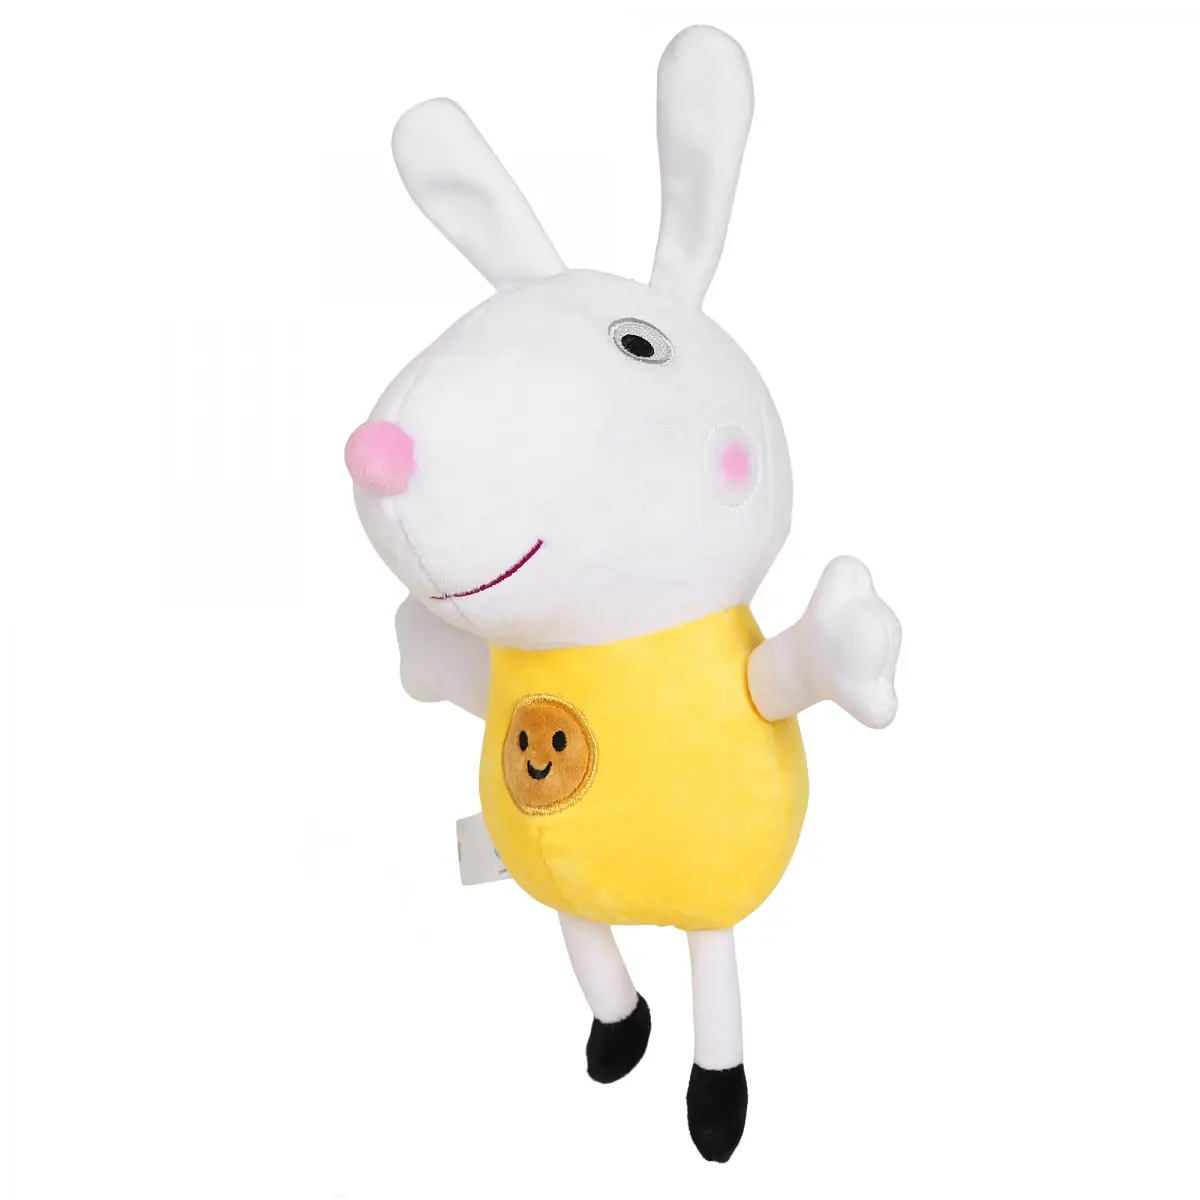 Peppa Pig Richard Rabbit Soft Toy for Kids, 30cm, 18M+, Multicolour